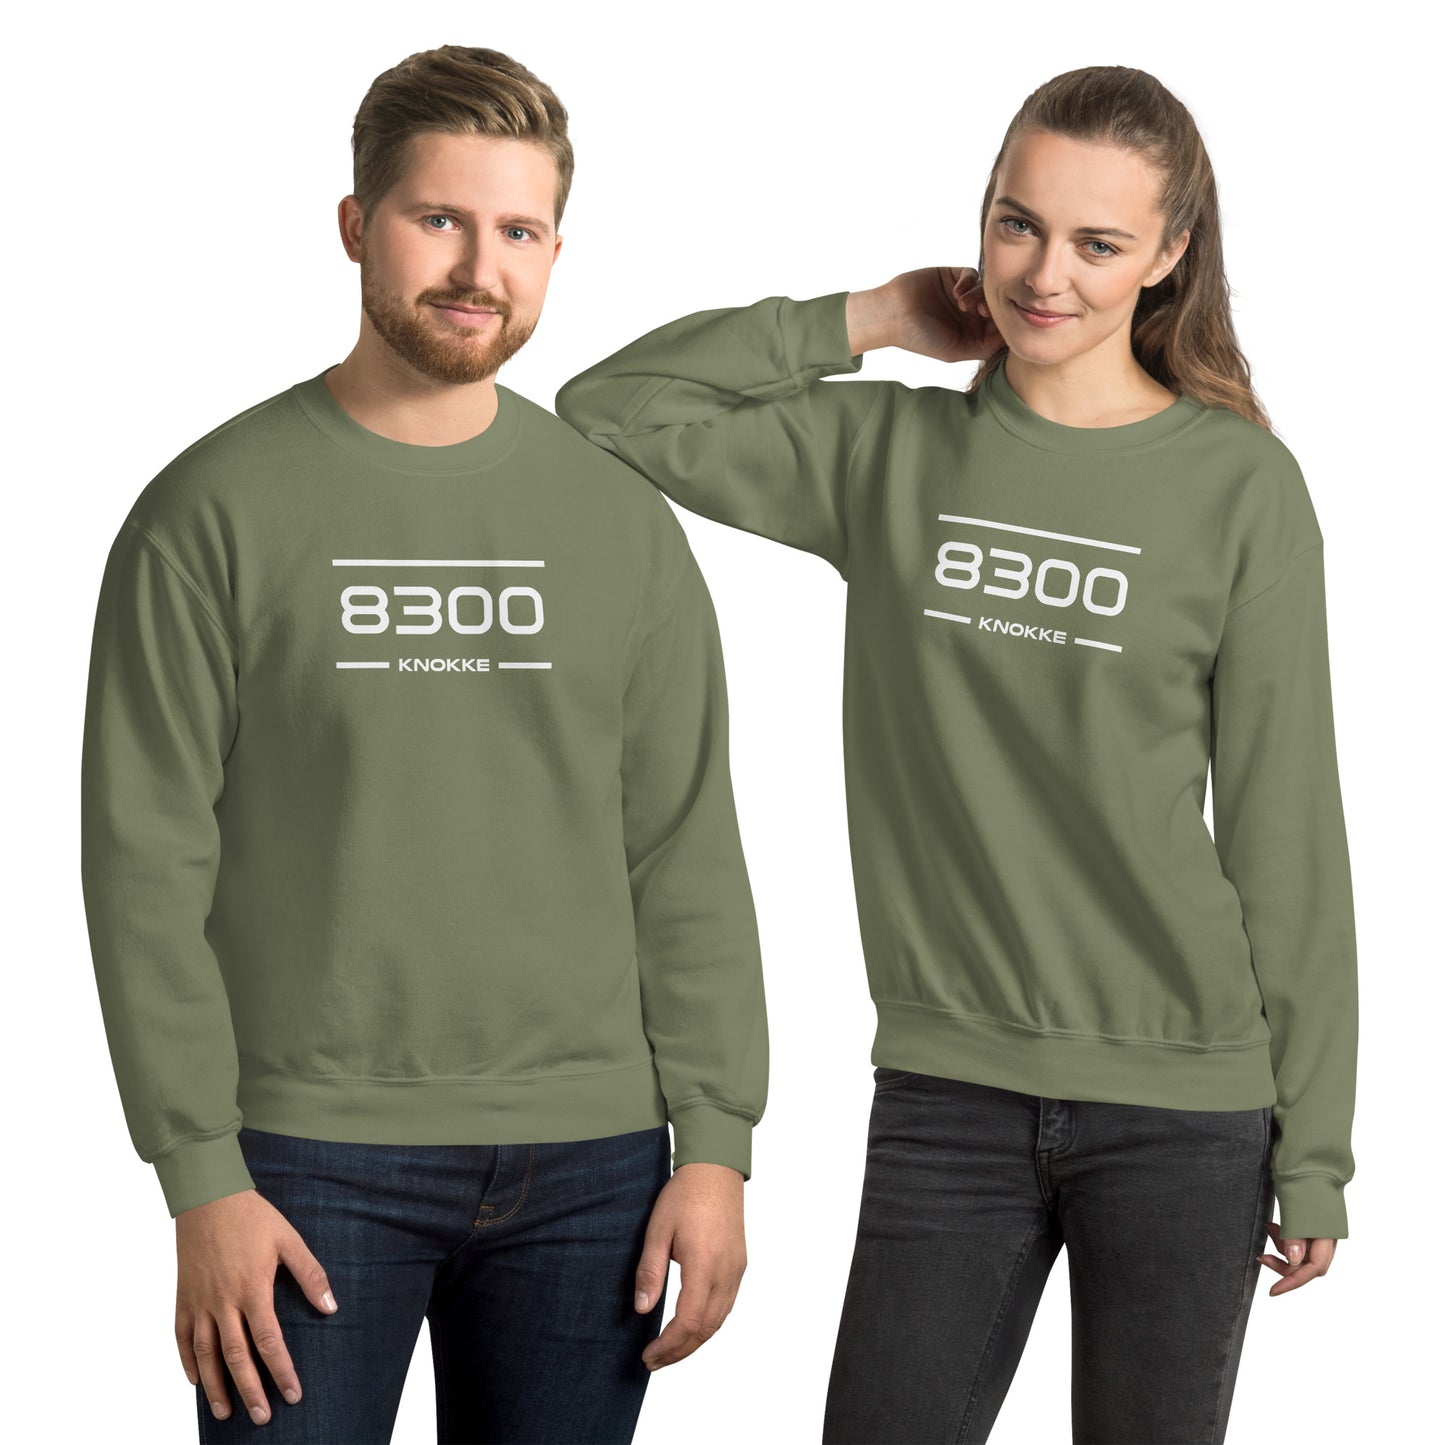 Sweater - 8300 - Knokke (M/V)